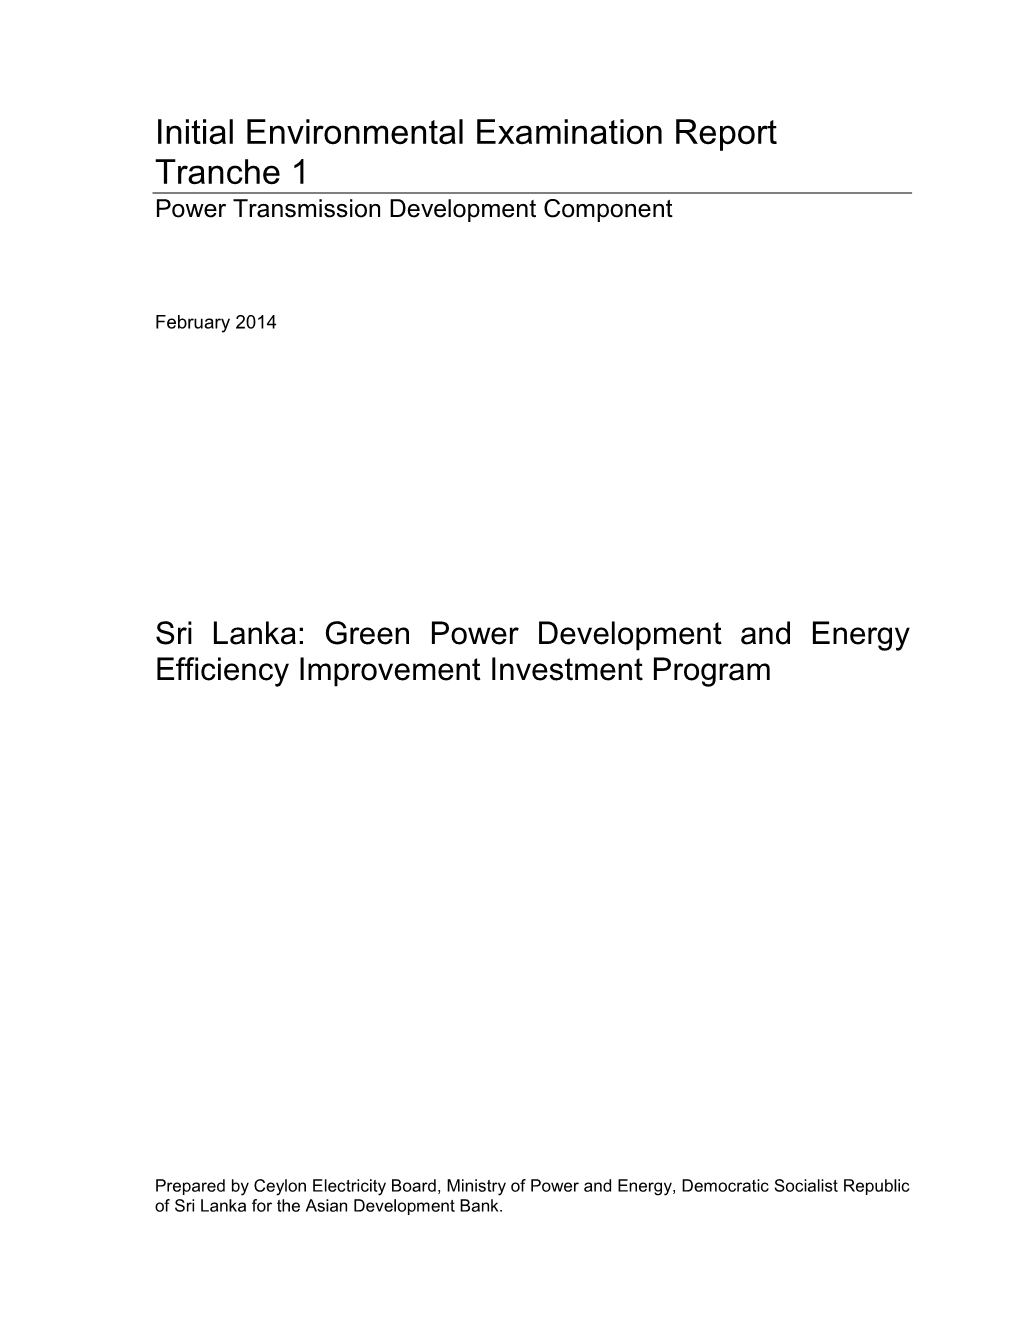 MFF-Green Power Development and Energy Efficiency Improvement